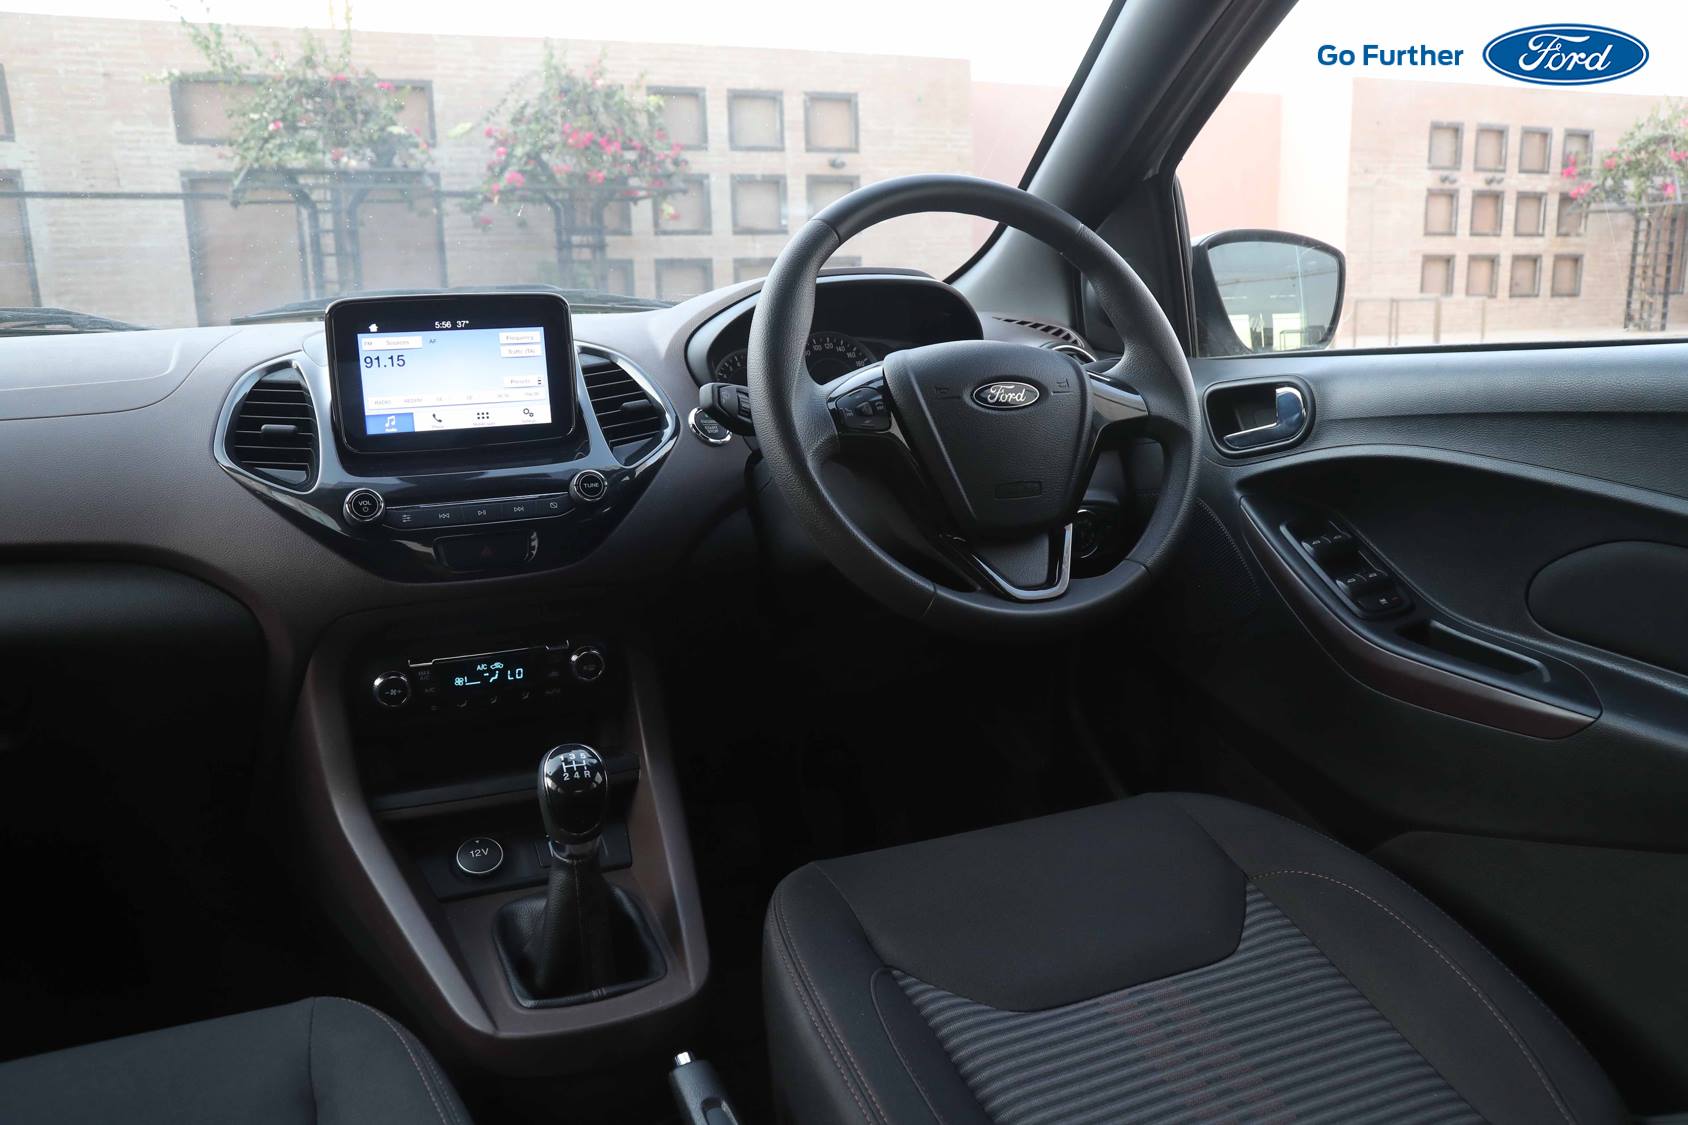 Ford-Figo-Freestyle-review-india -interior-picture (2) - Thrust Zone1688 x 1125